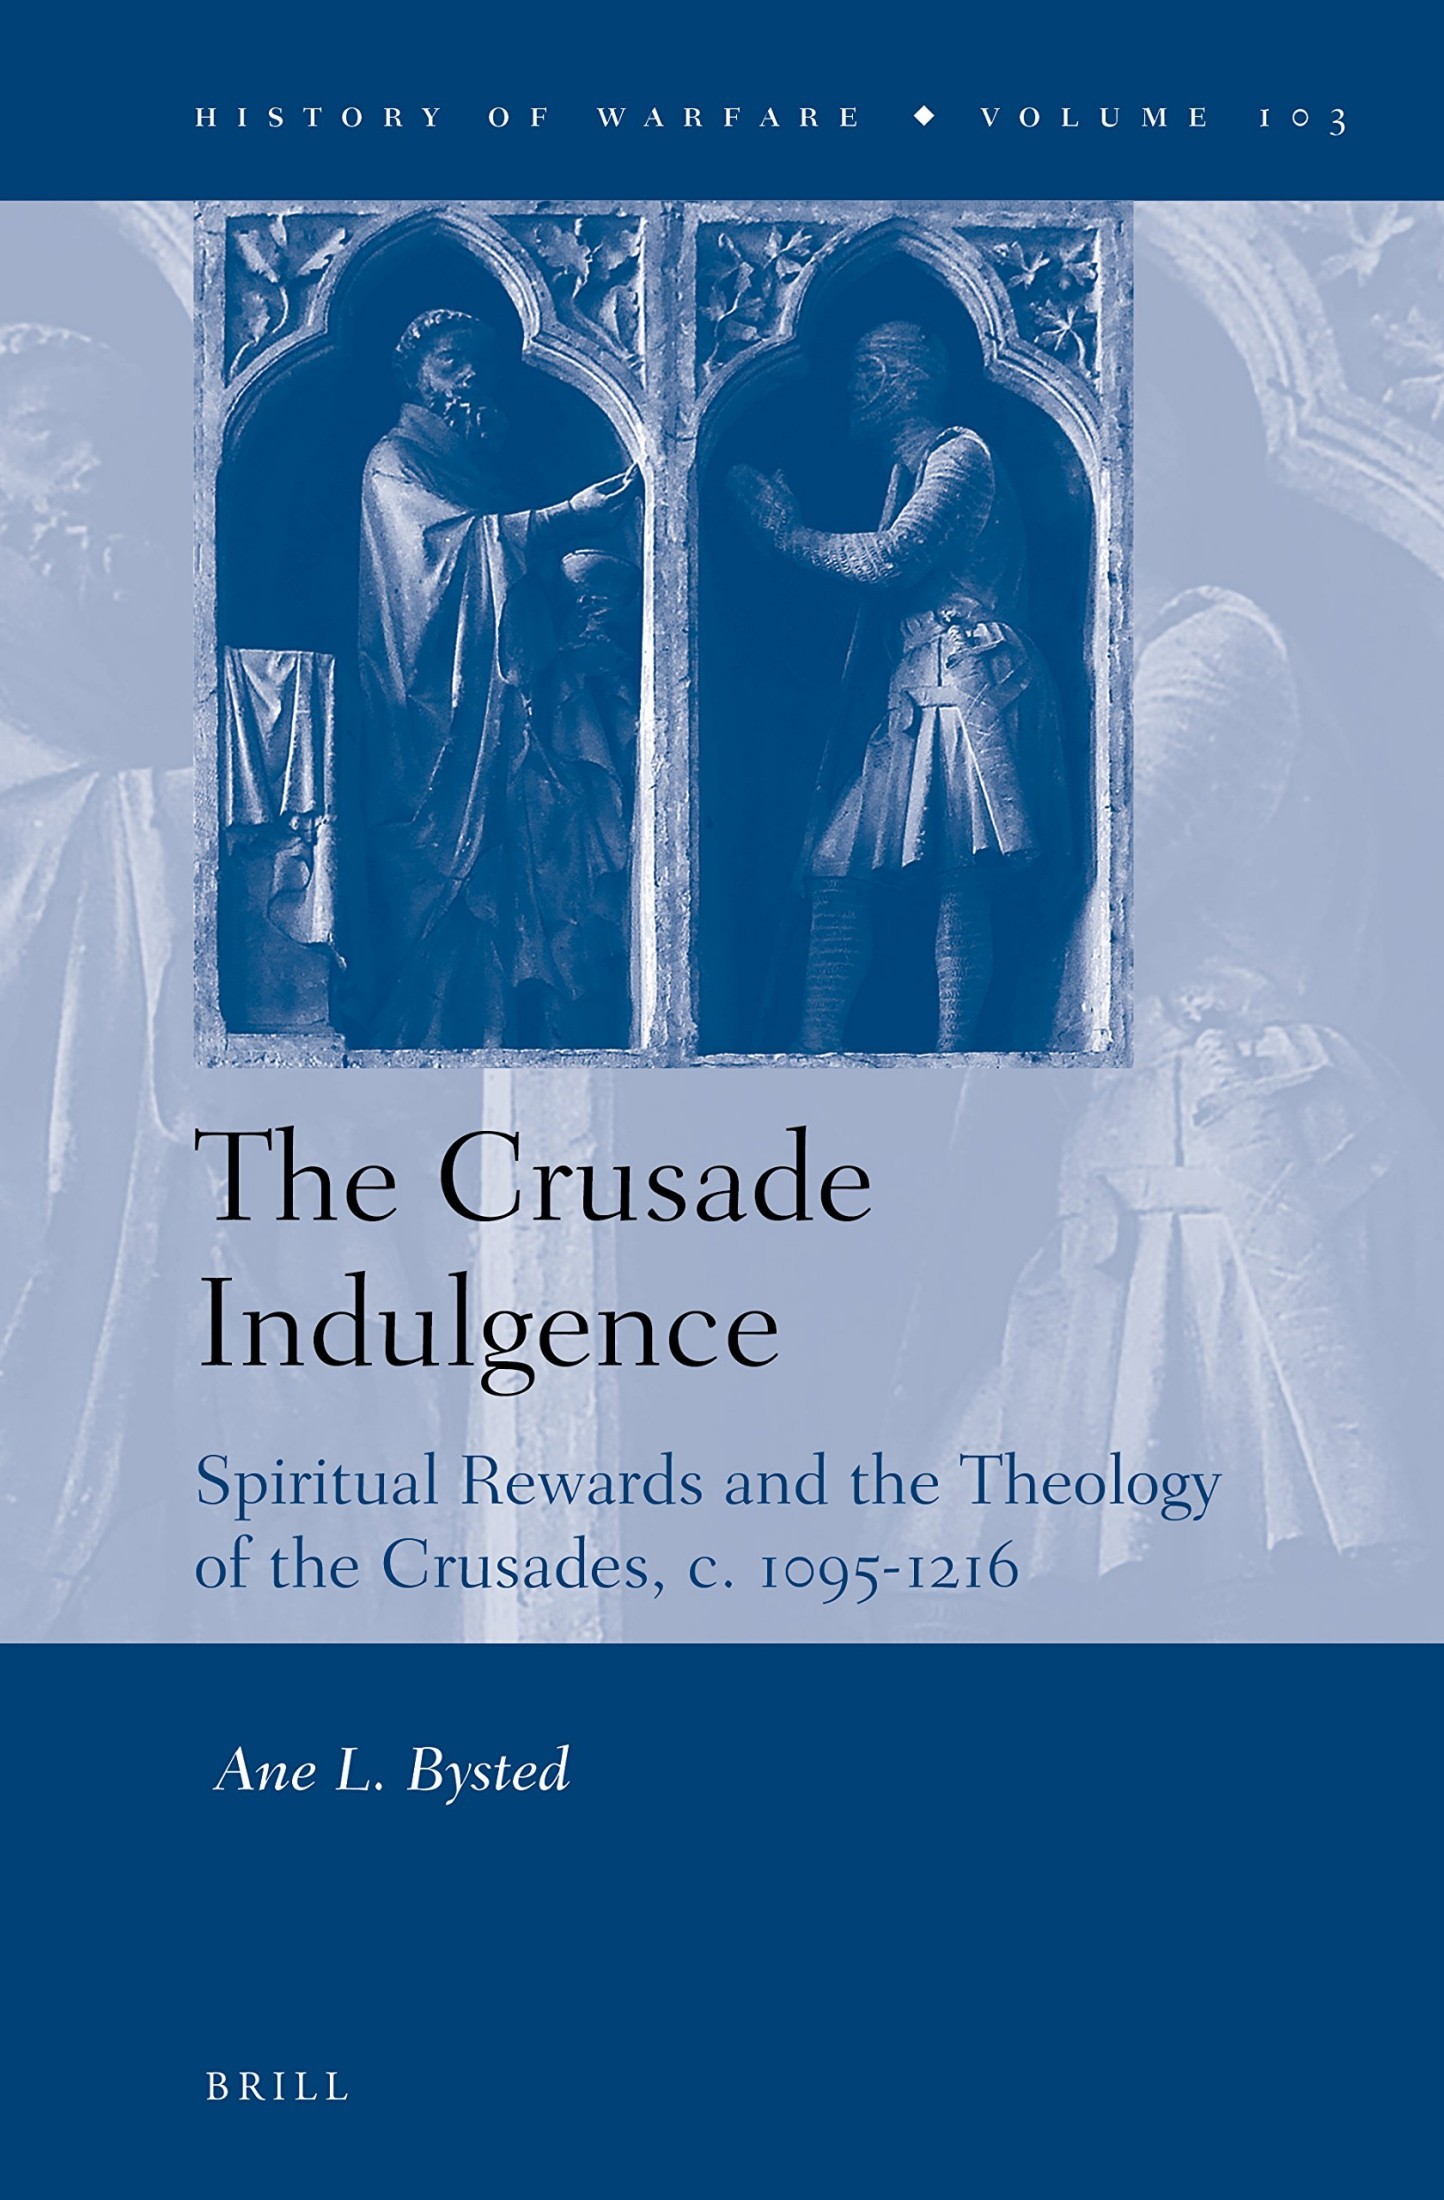 The Crusade Indulgence: Spiritual Rewards and the Theology of the Crusades, C. 1095-1216